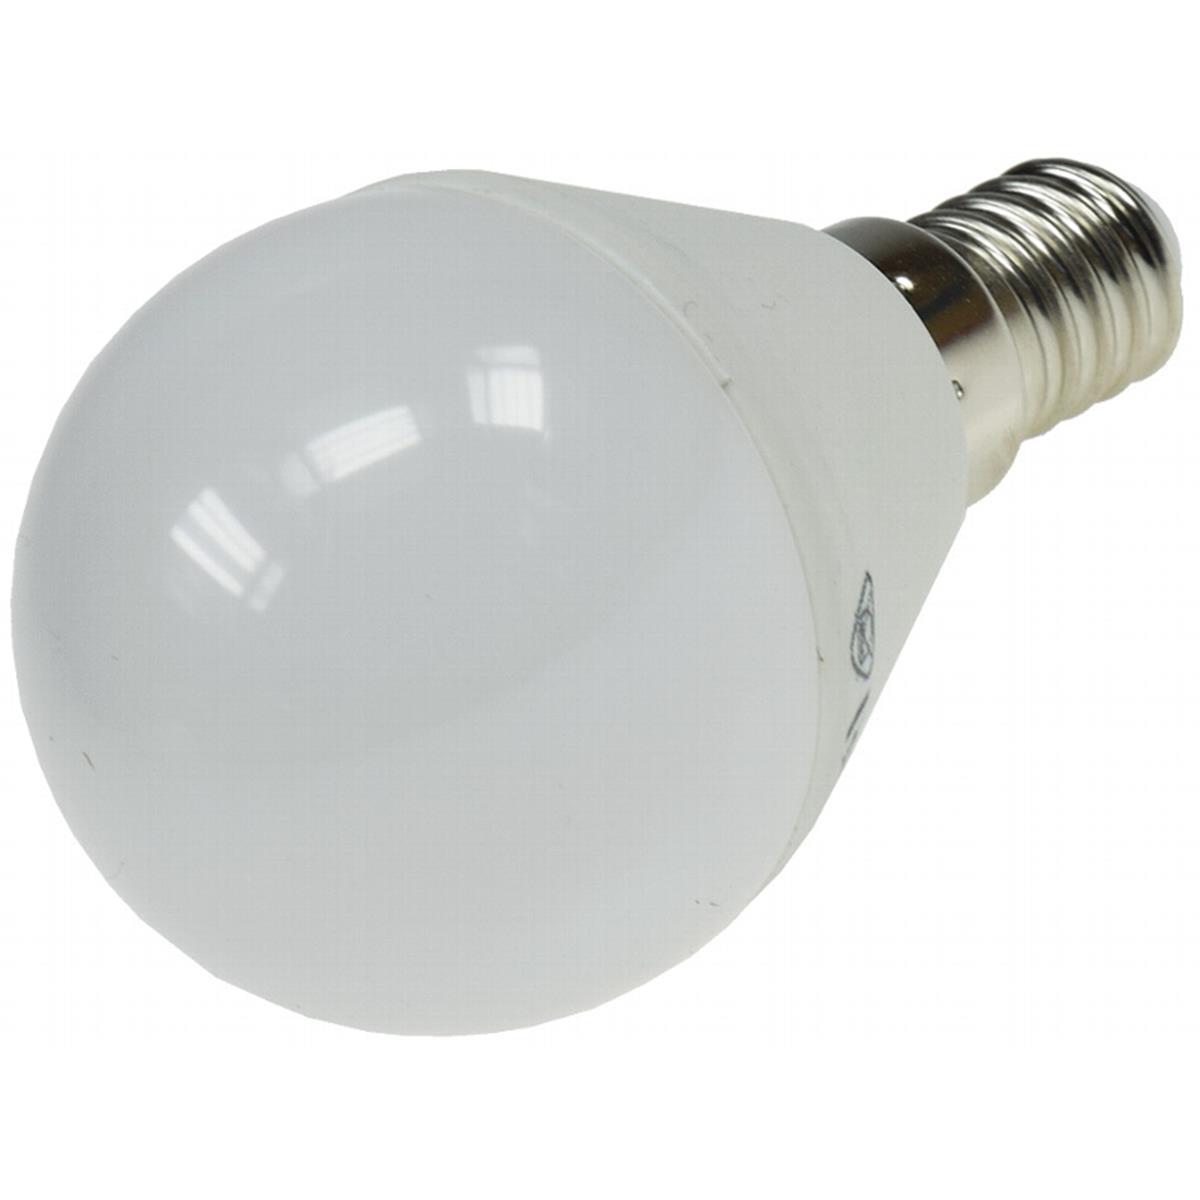 LED Tropfenlampe E14 "T25 SMD" warmweiß 16 SMD LEDs, 3000k, 220lm, 230V/3W, 45mm